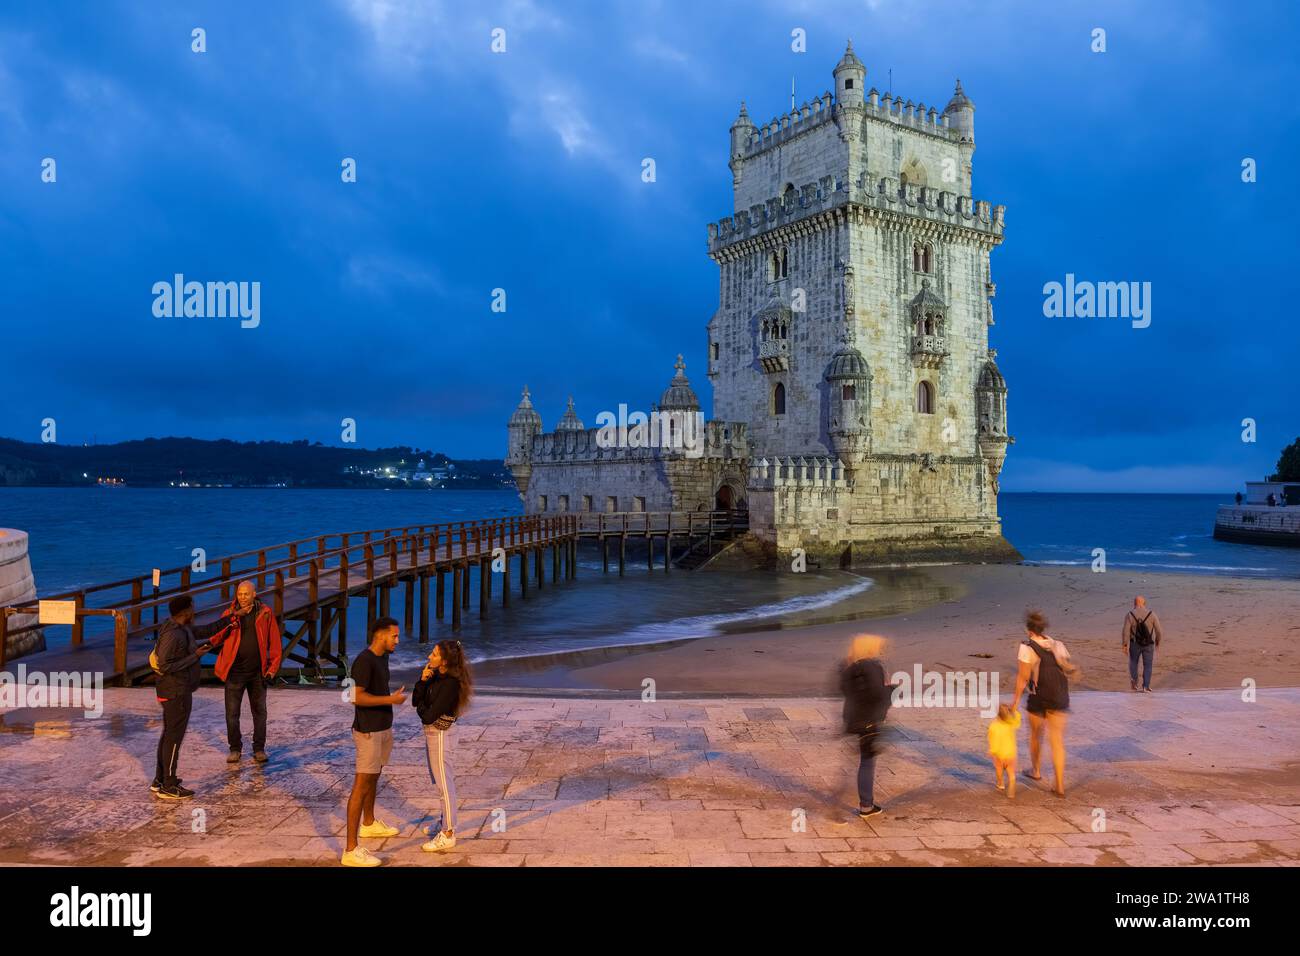 Der Torre de Belem (Torre de Belem) in der Abenddämmerung in Lissabon, Portugal, Festung aus dem 16. Jahrhundert am Fluss Tejo. Stockfoto